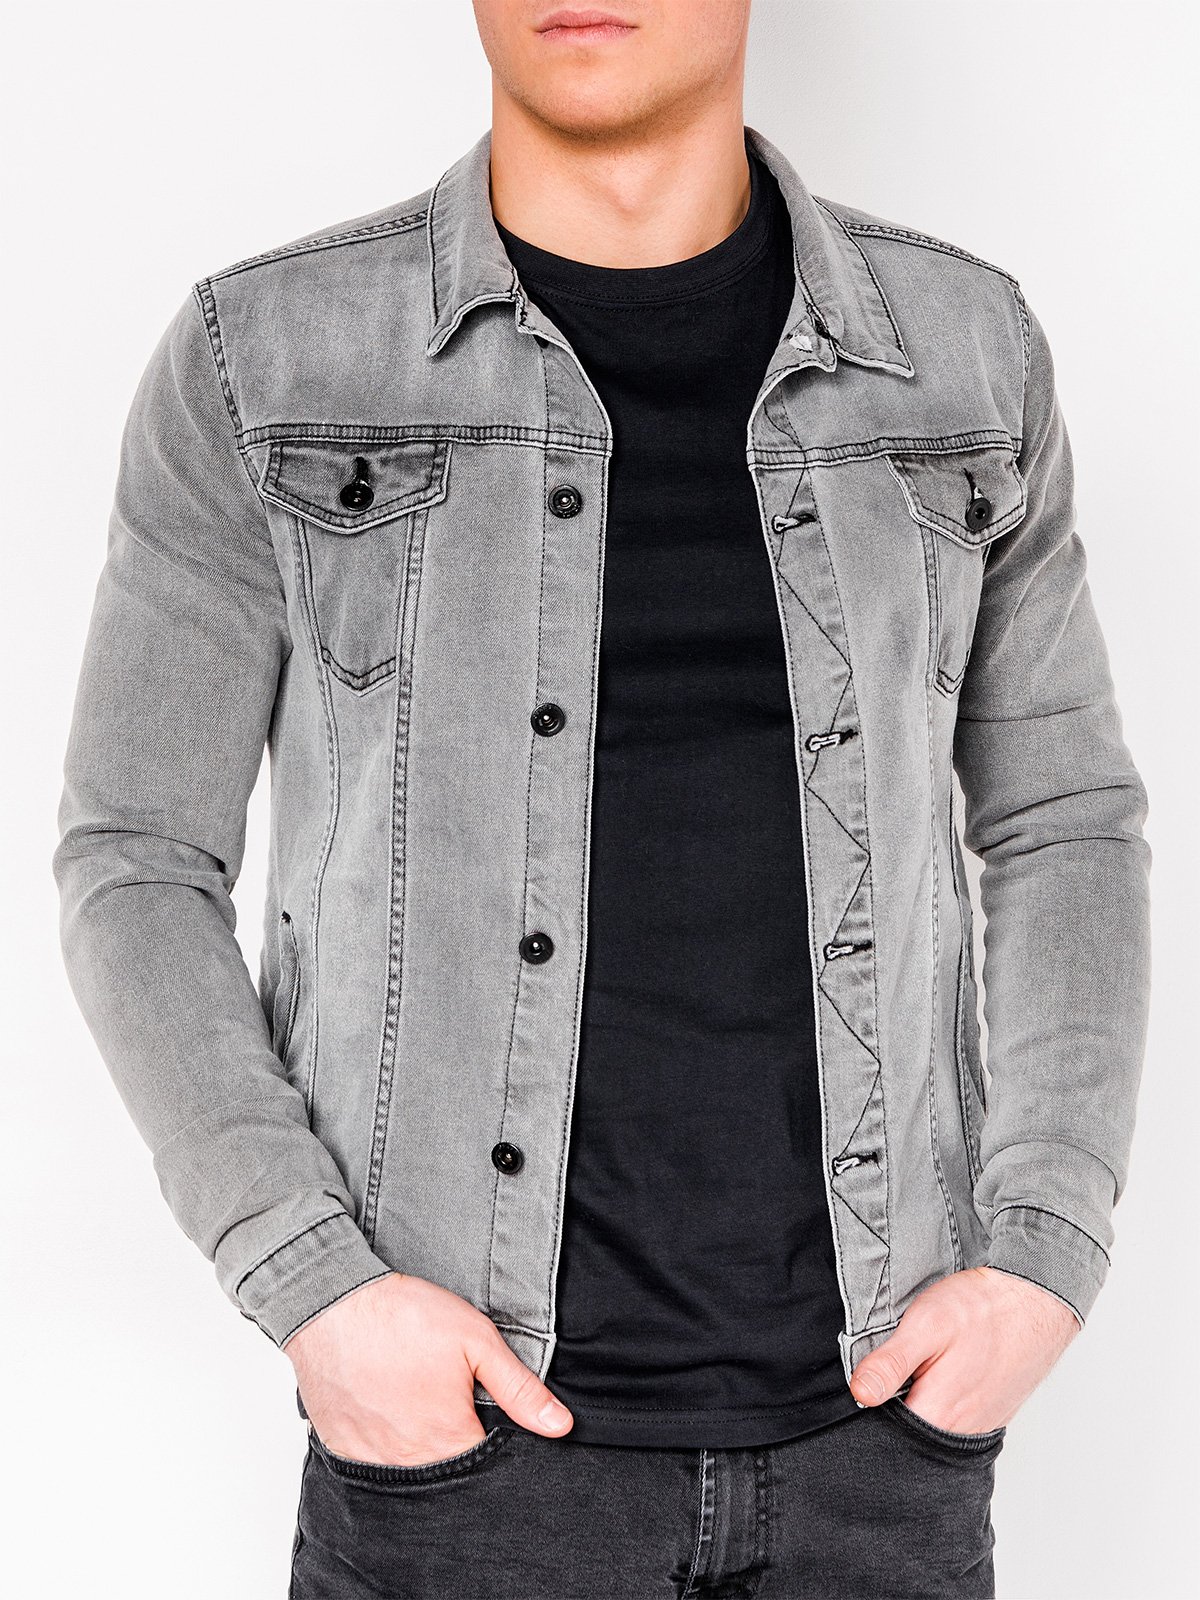 Men's mid-season jeans jacket C345 - grey | MODONE wholesale - Clothing ...